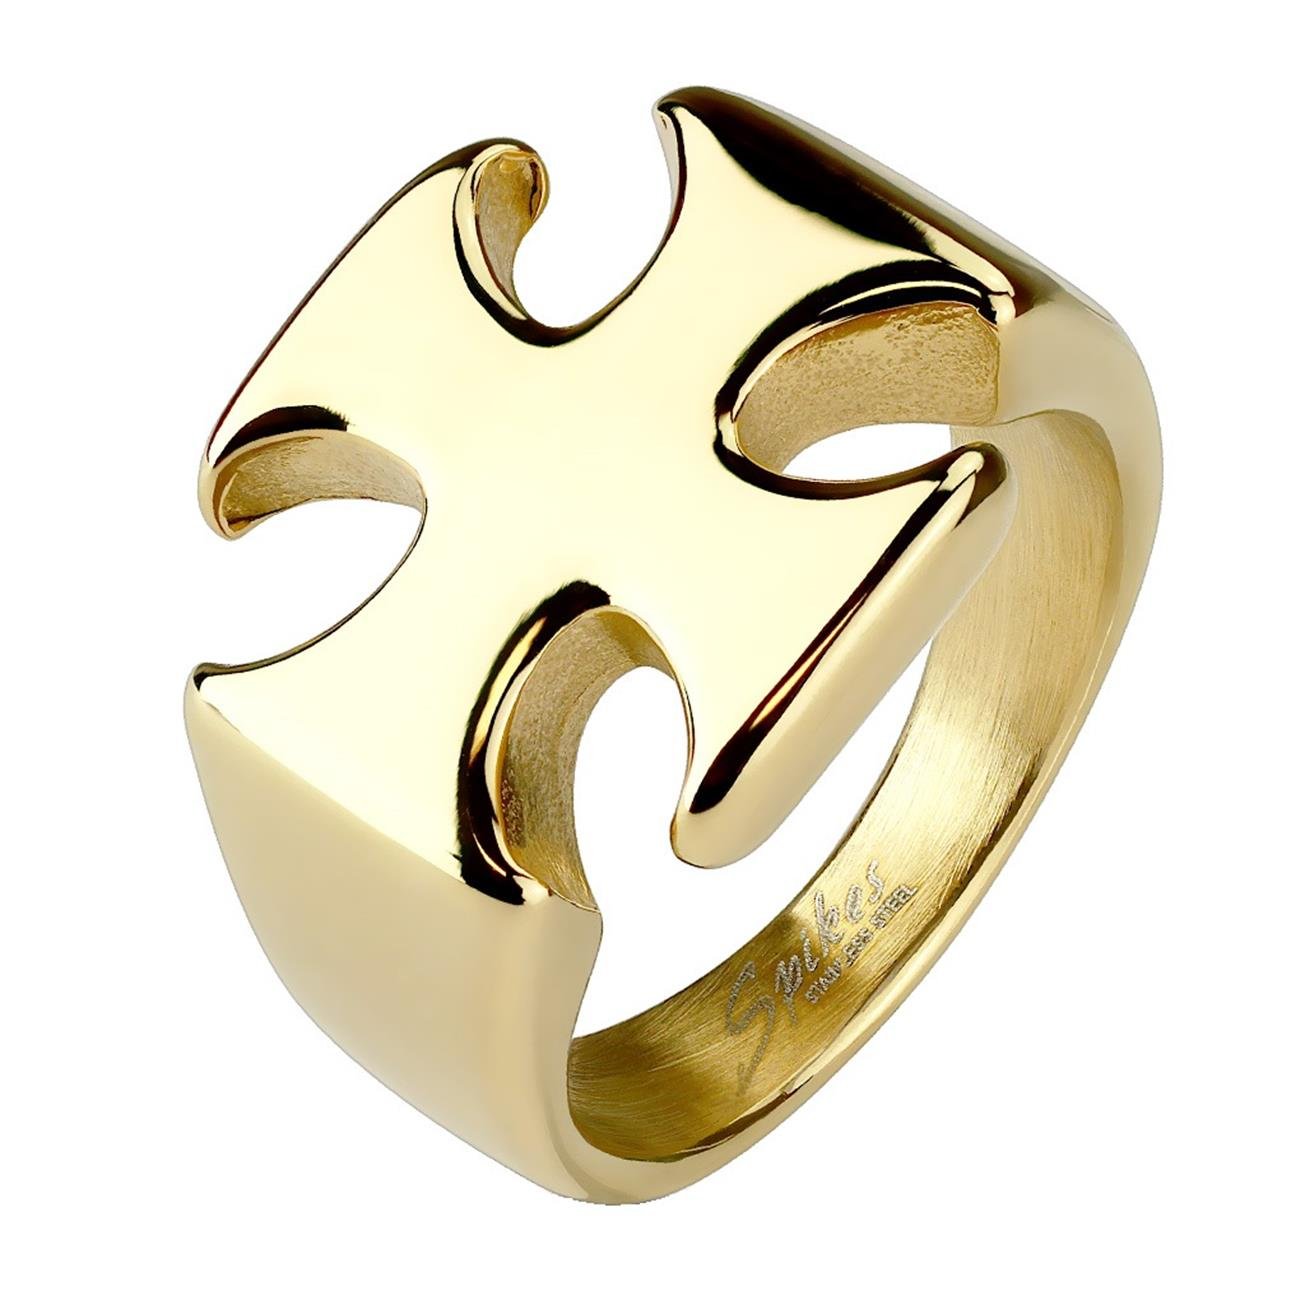 EISERNE Kreuz 18mm breit Edelstahlring Damenring Verlobungs-Ring Freundschaftsring Herrenring Partnerring schwarz Silber Gold verfügbare Ringgrößen 60 (19,0) - 72 (23,0)